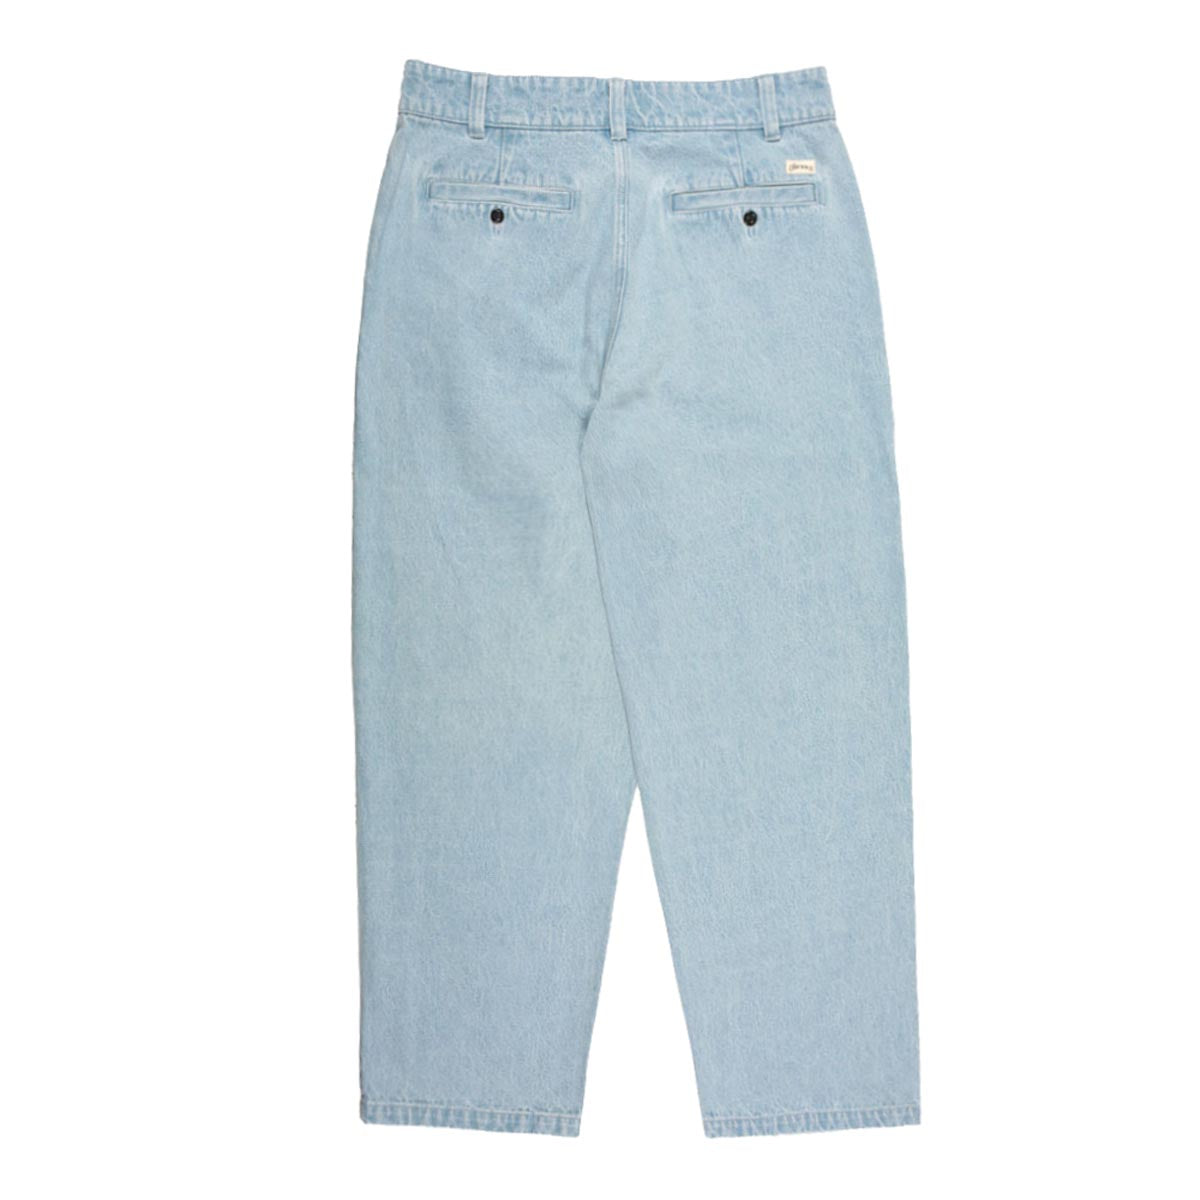 Theories Belvedere Denim Trouser Jeans - Lightwash Blue image 2